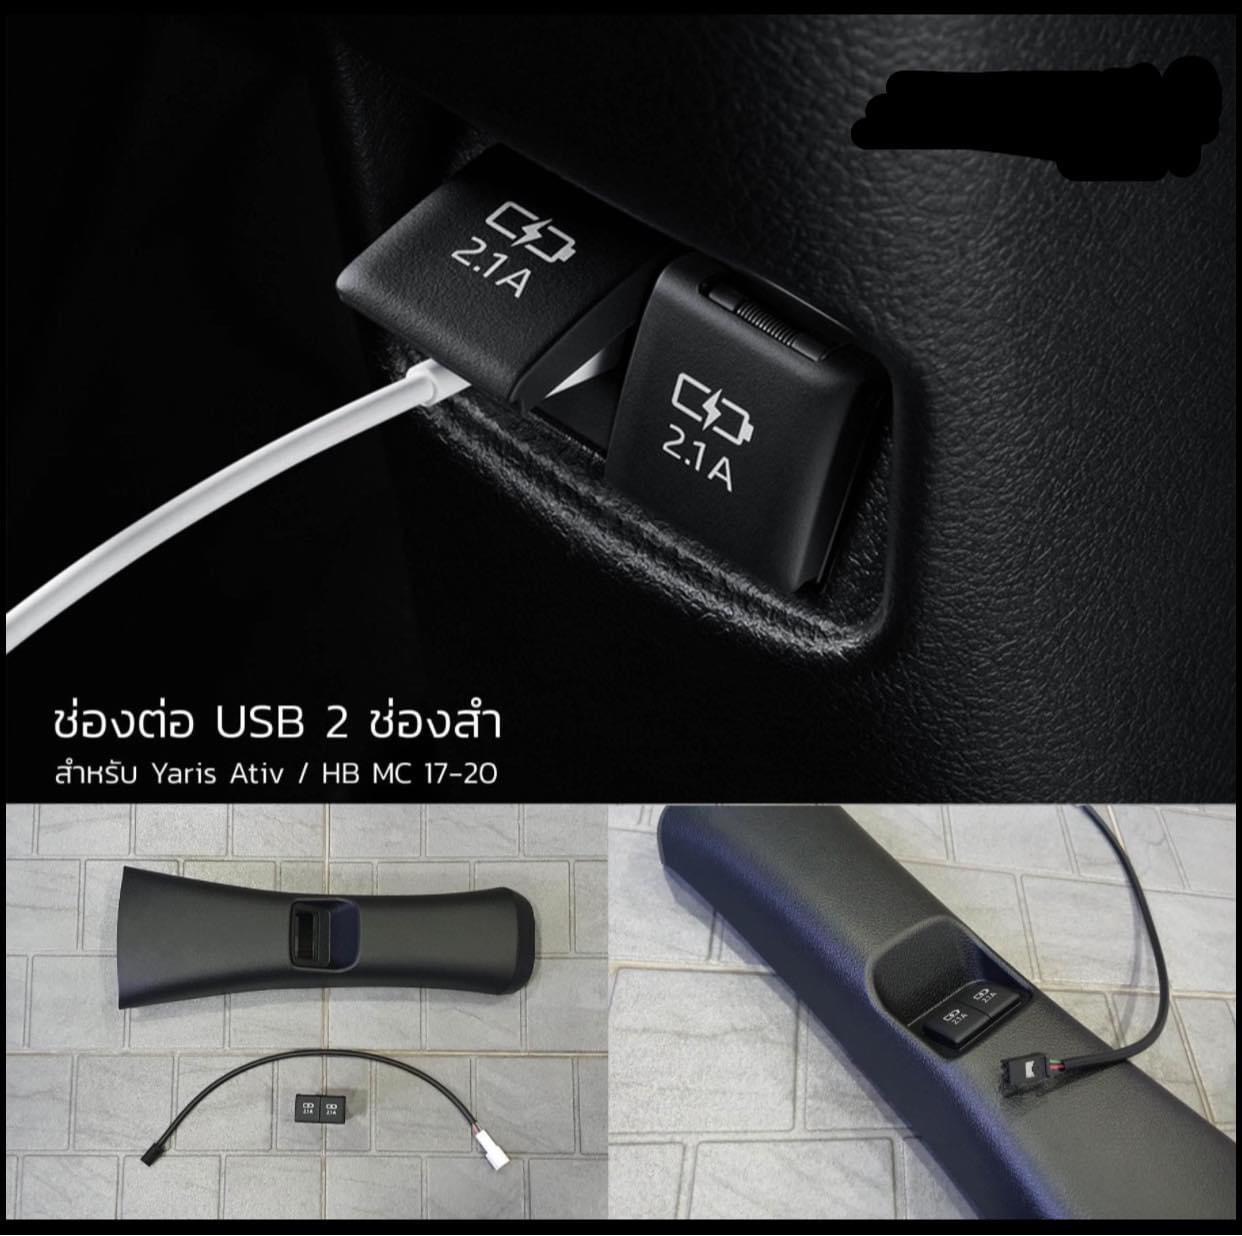 Cổng USB ghế sau Toyota Vios Yaris